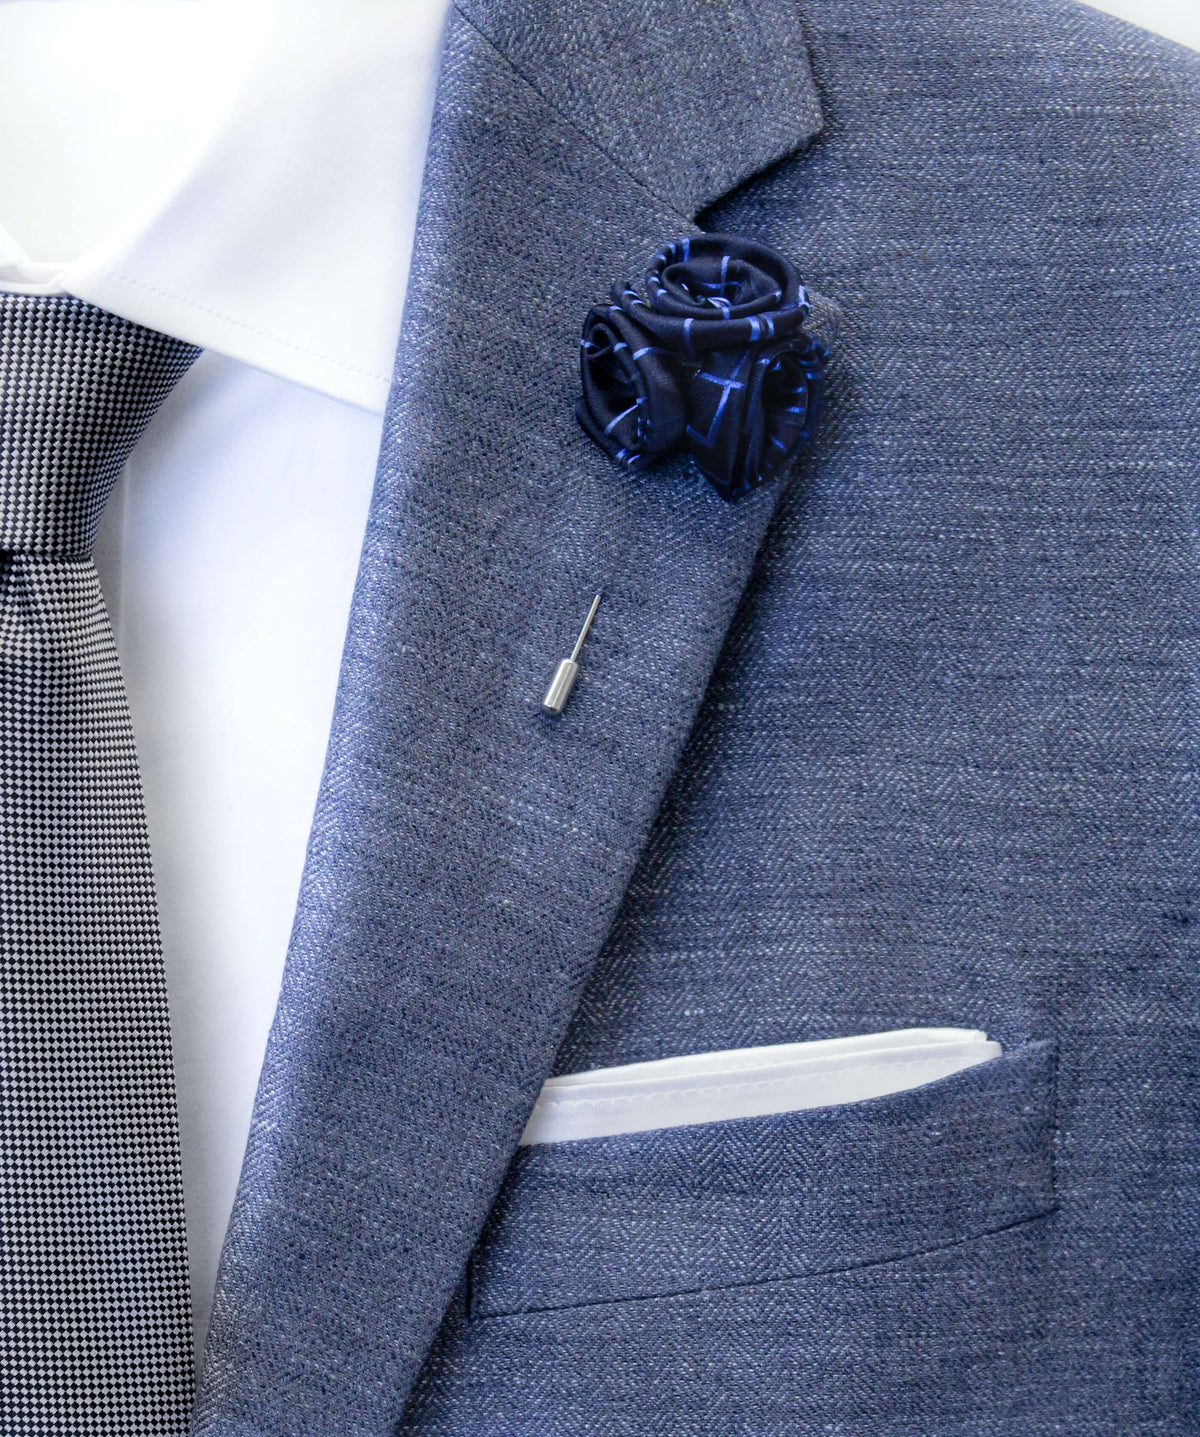 Black &amp; Blue Flower Lapel Pin